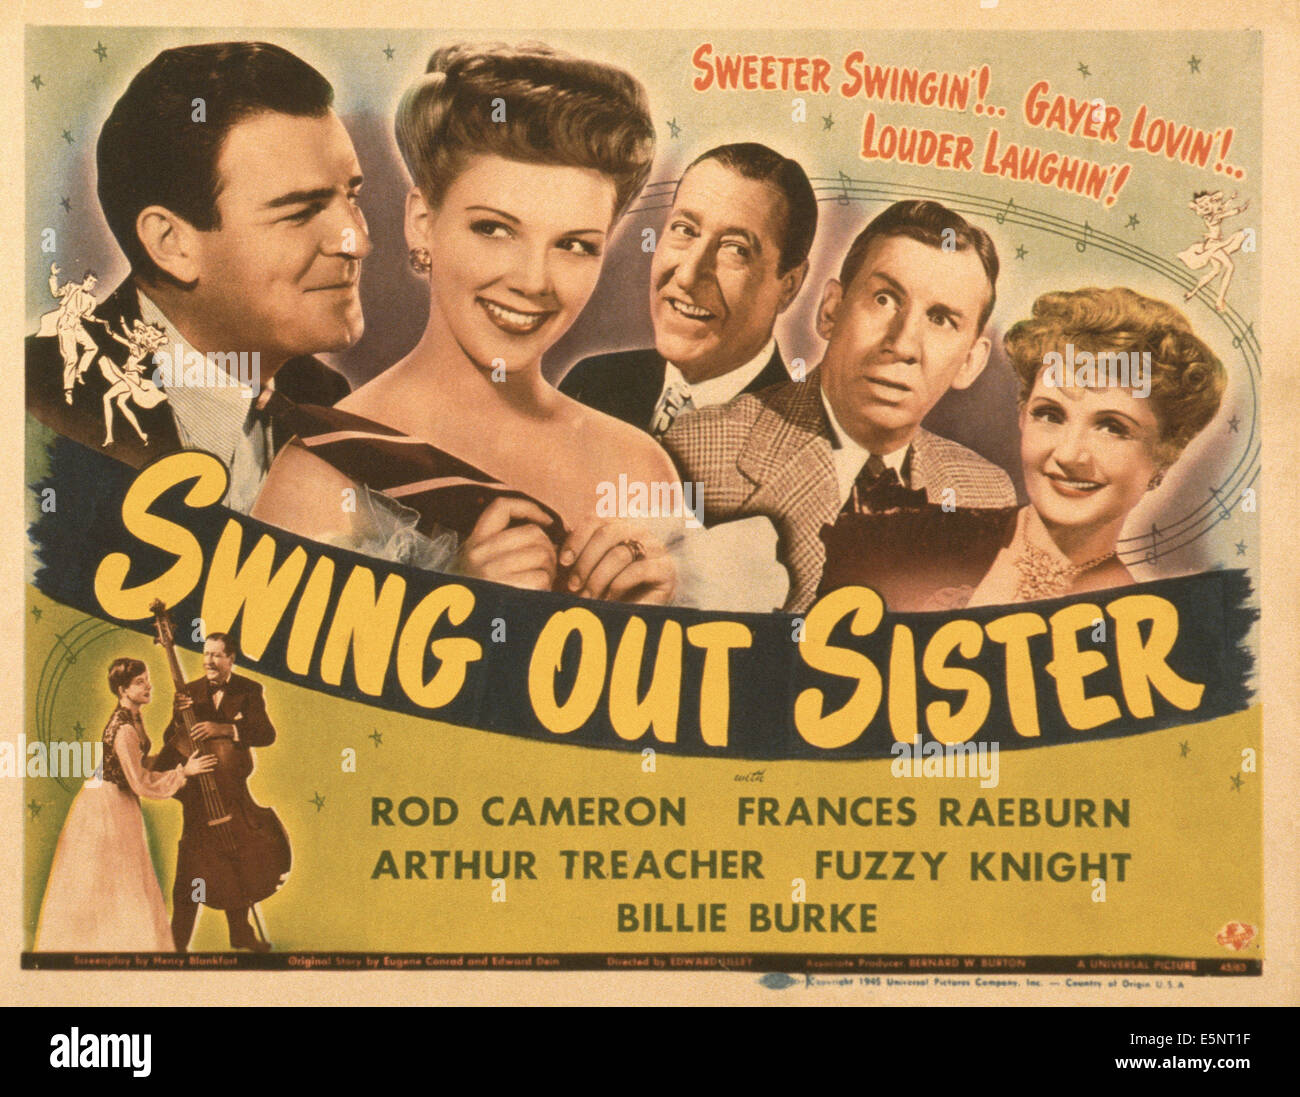 SWING OUT, hermana, nosotros póster, arriba a la izquierda: Rod Cameron, Frances Maeburn, Arthur Treacher, Fuzzy Knight, Billie Burke, 1945 Foto de stock